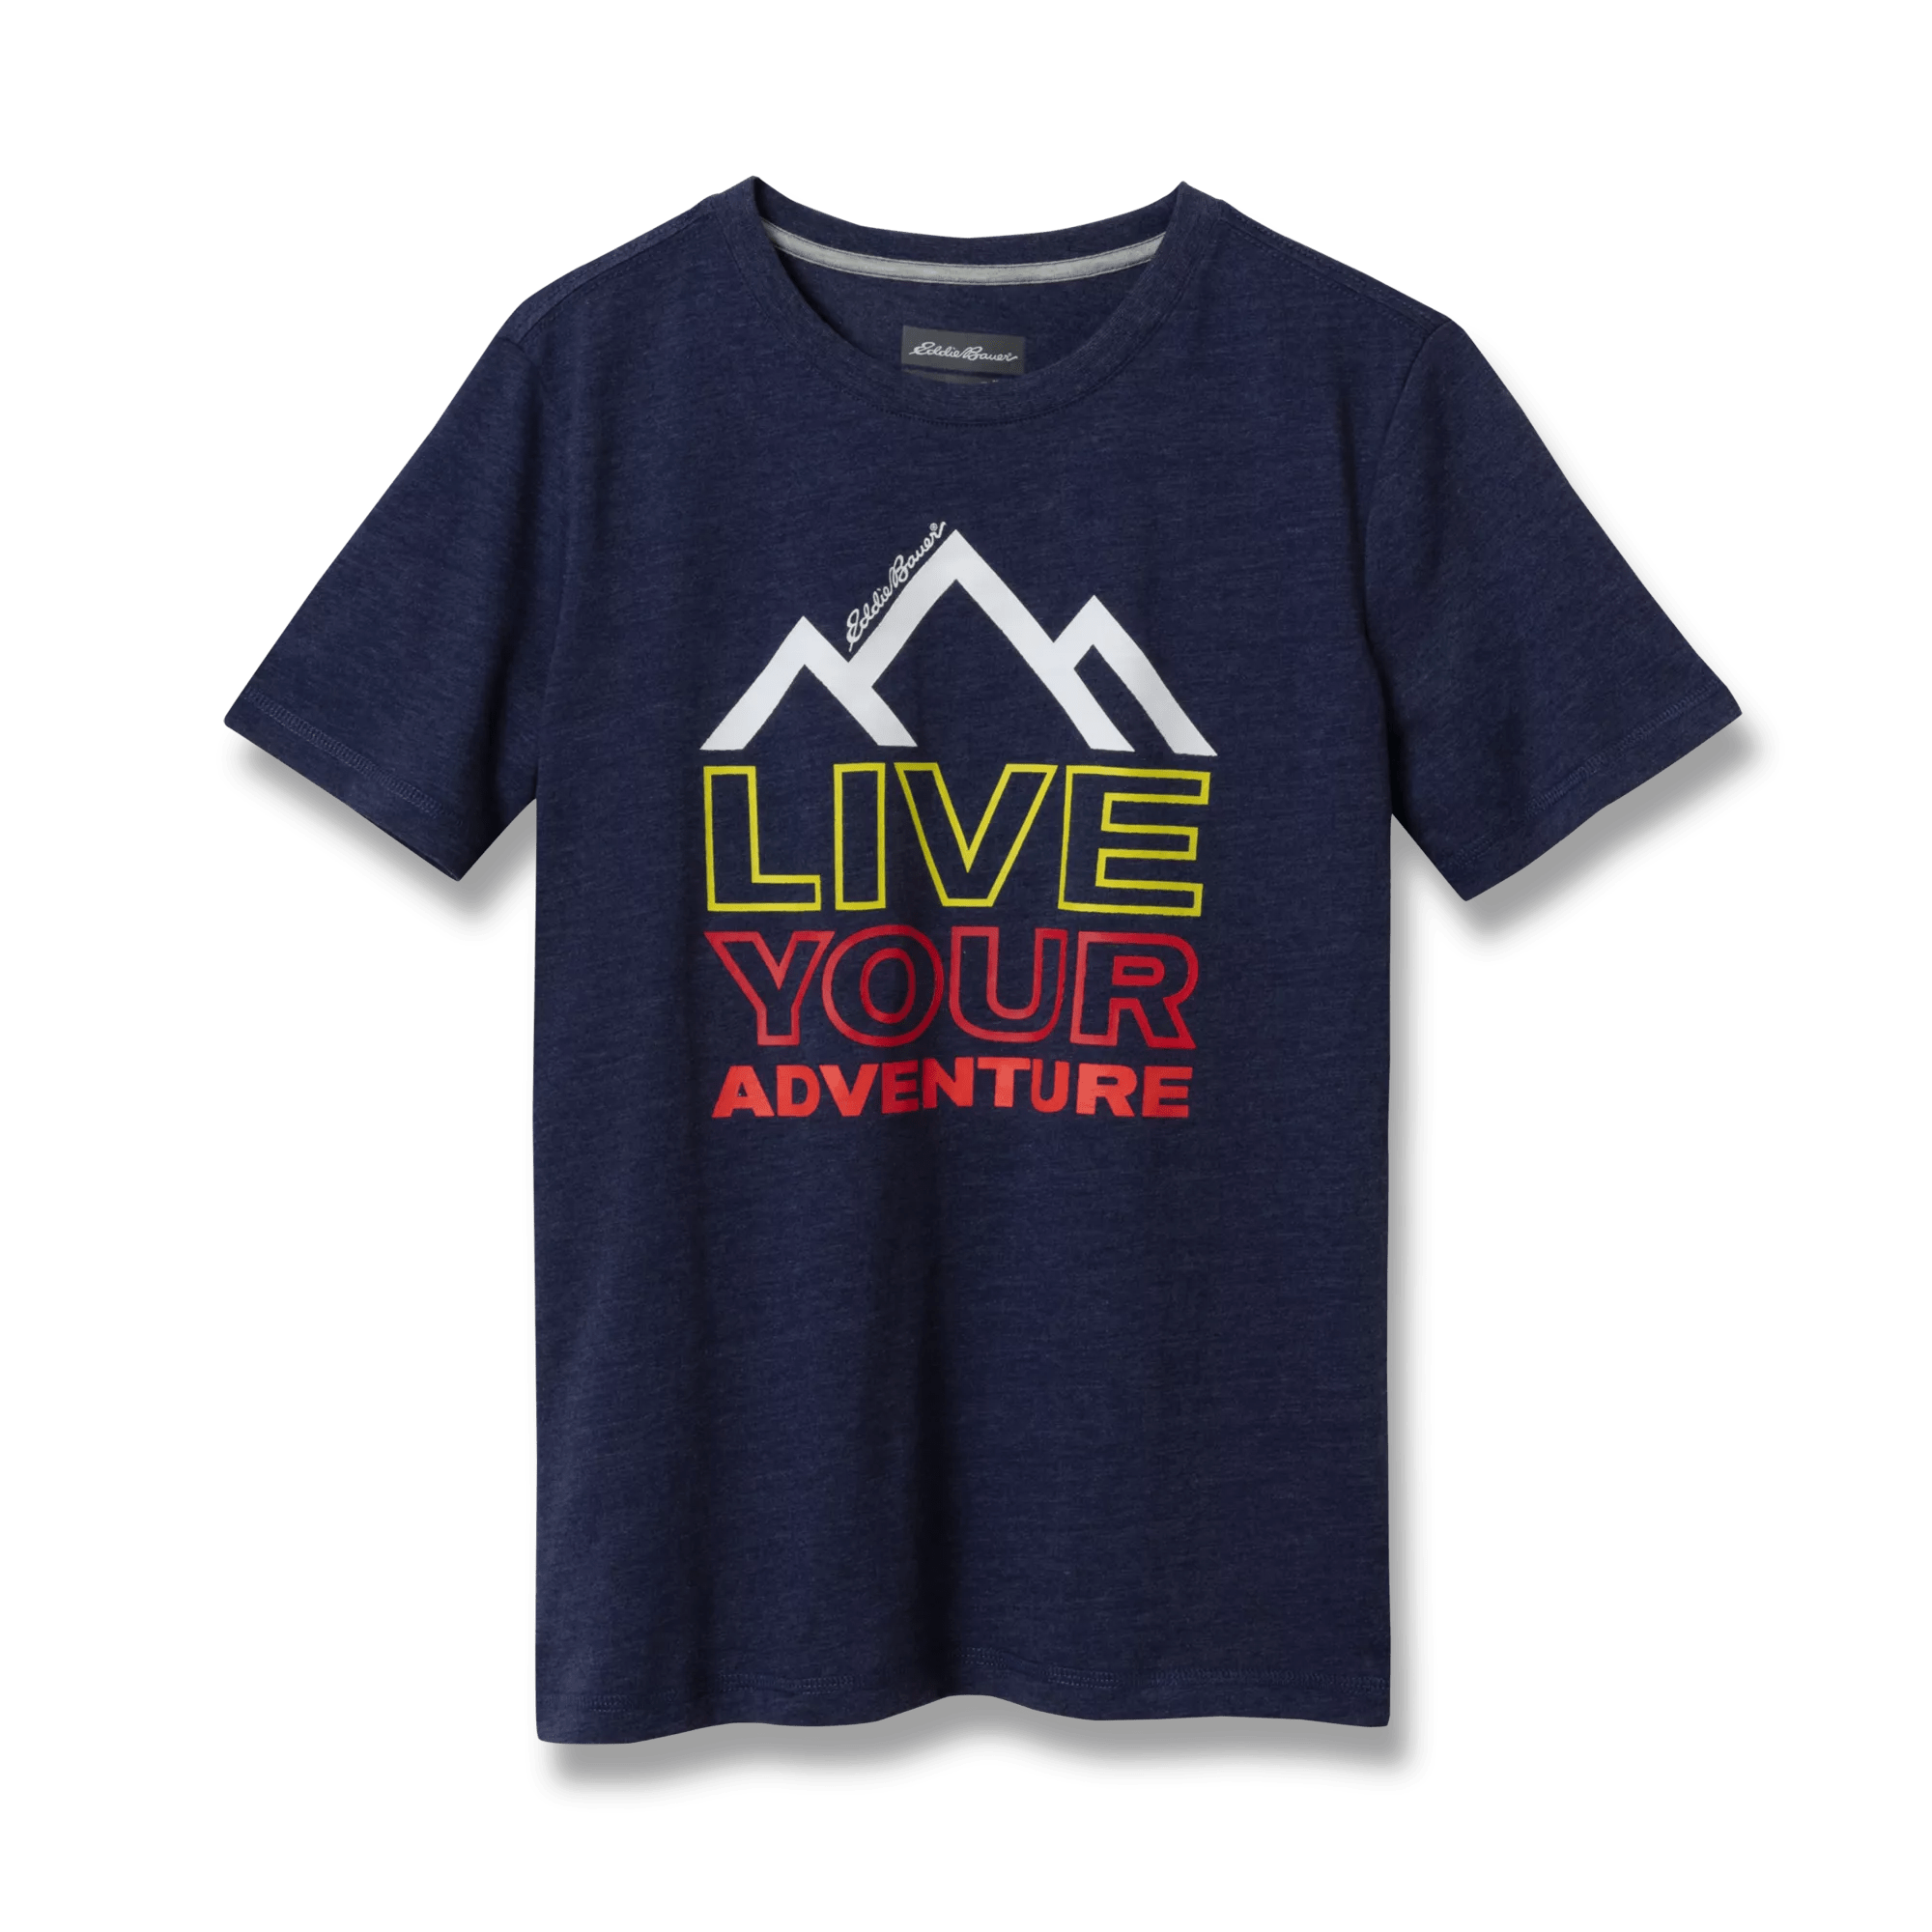 Graphic T-Shirt